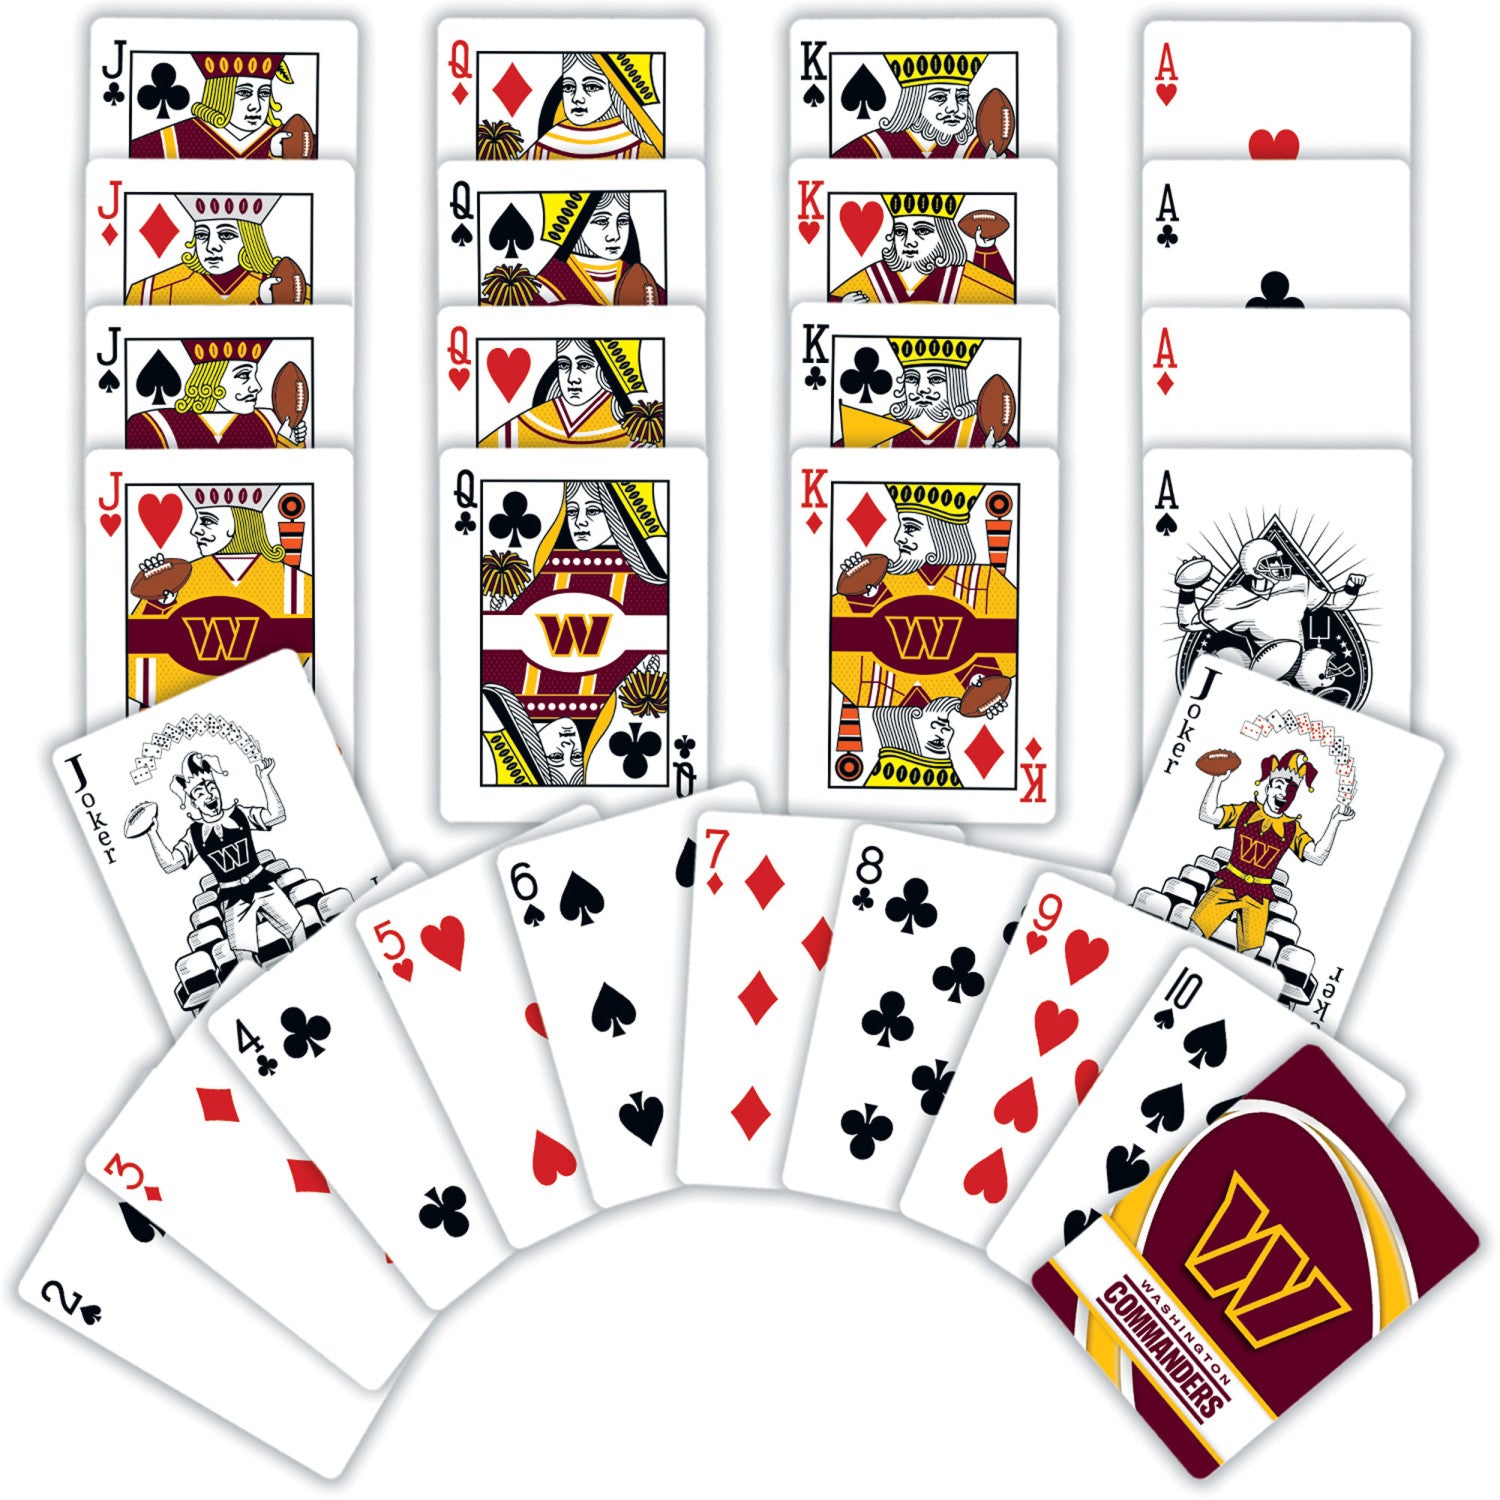 Washington Commanders Playing Cards